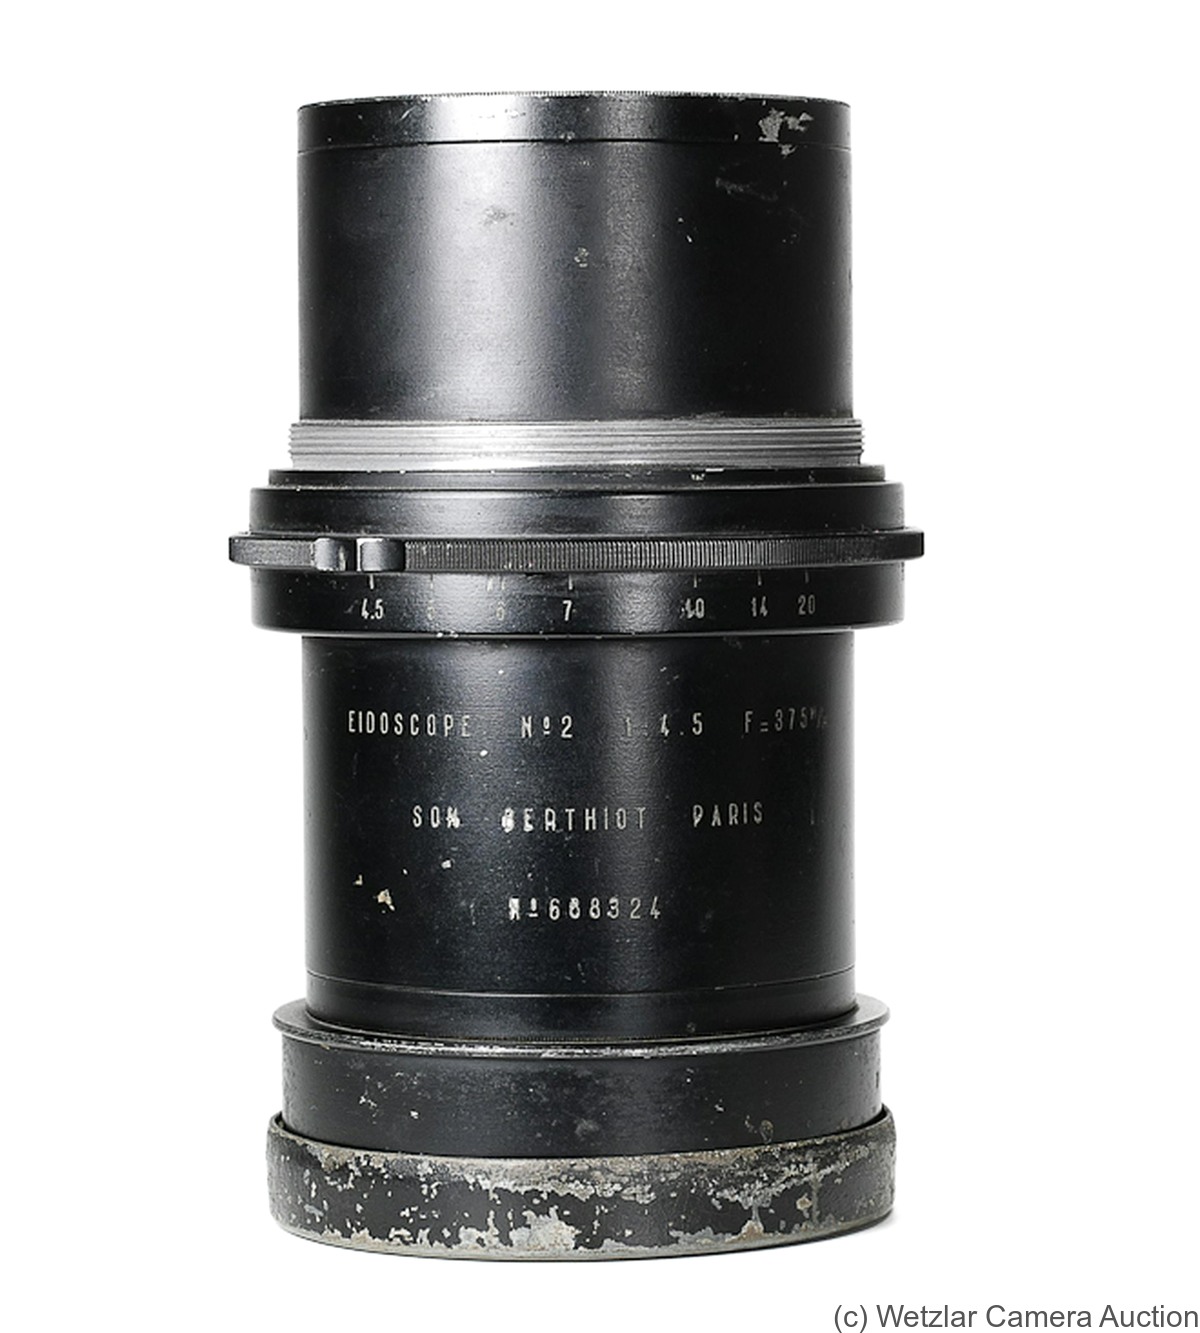 Berthiot, Som: 375mm (37.5cm) f4.5 Eidoscope No.2 camera